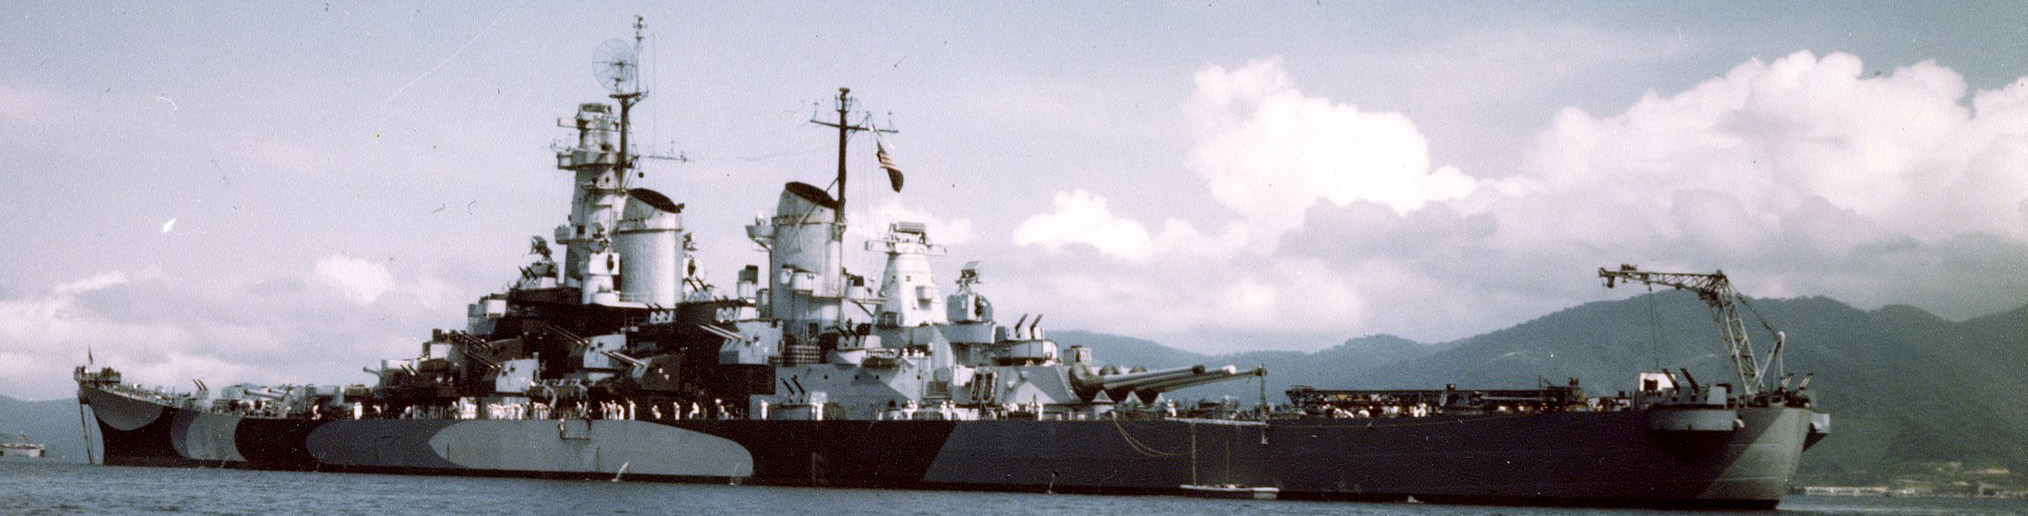 Size comparison of the battleship USS Missouri (BB-63) moored near